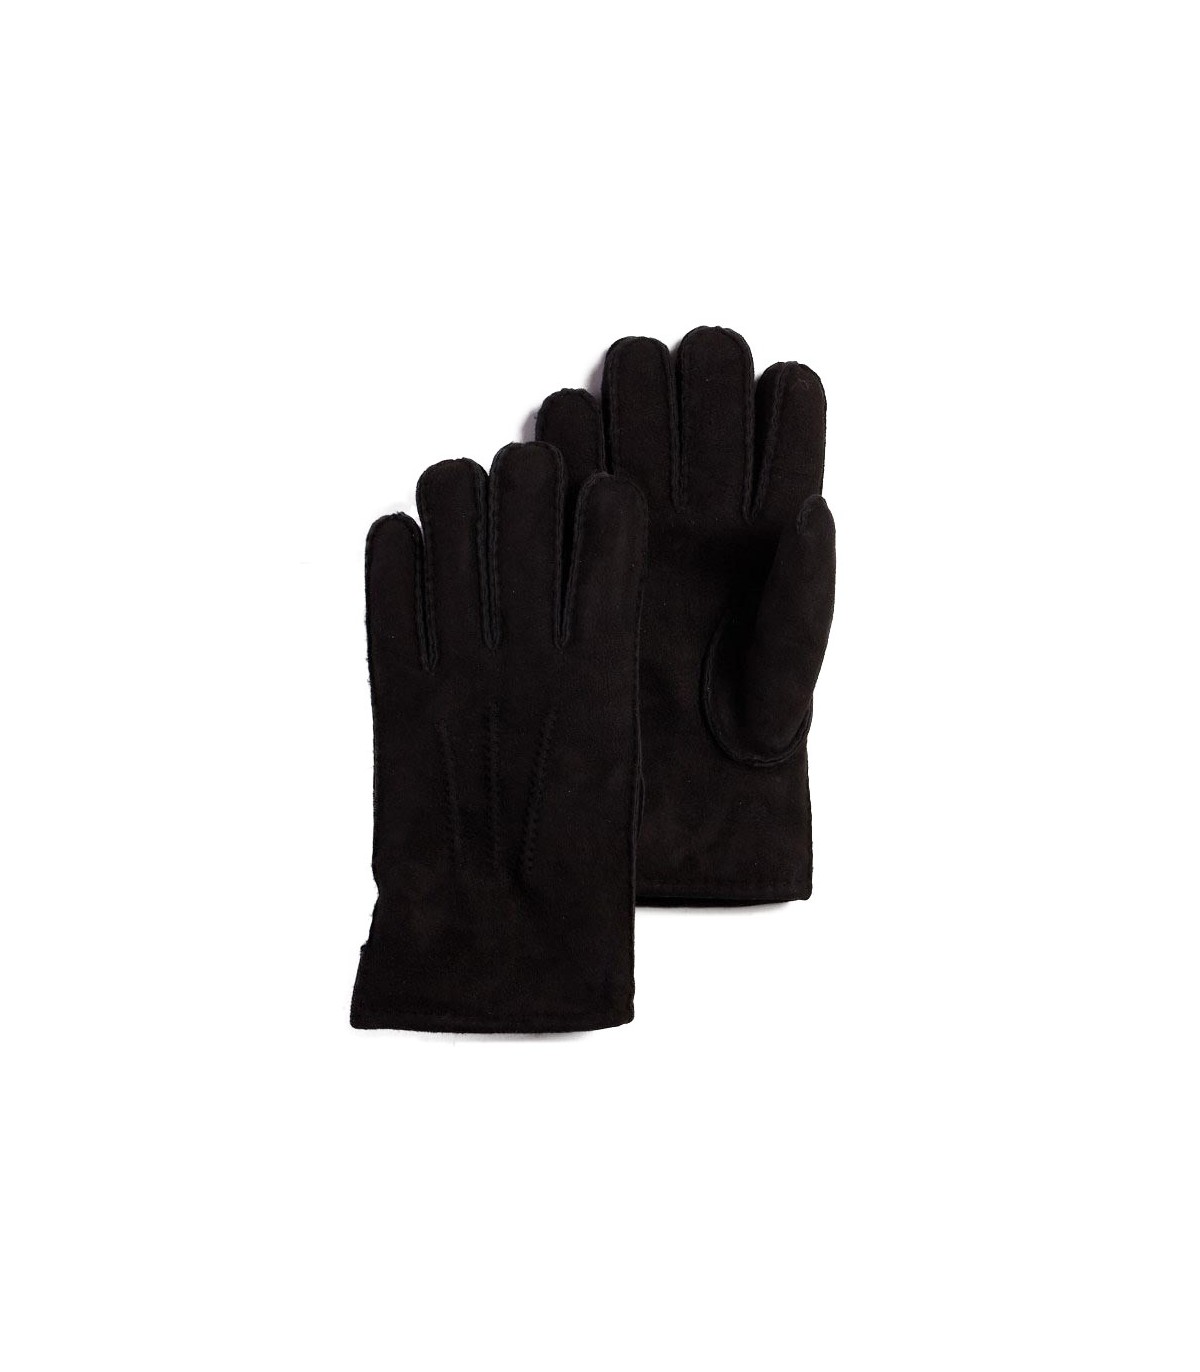 Mens sheepskin Leather Gloves,Black, 